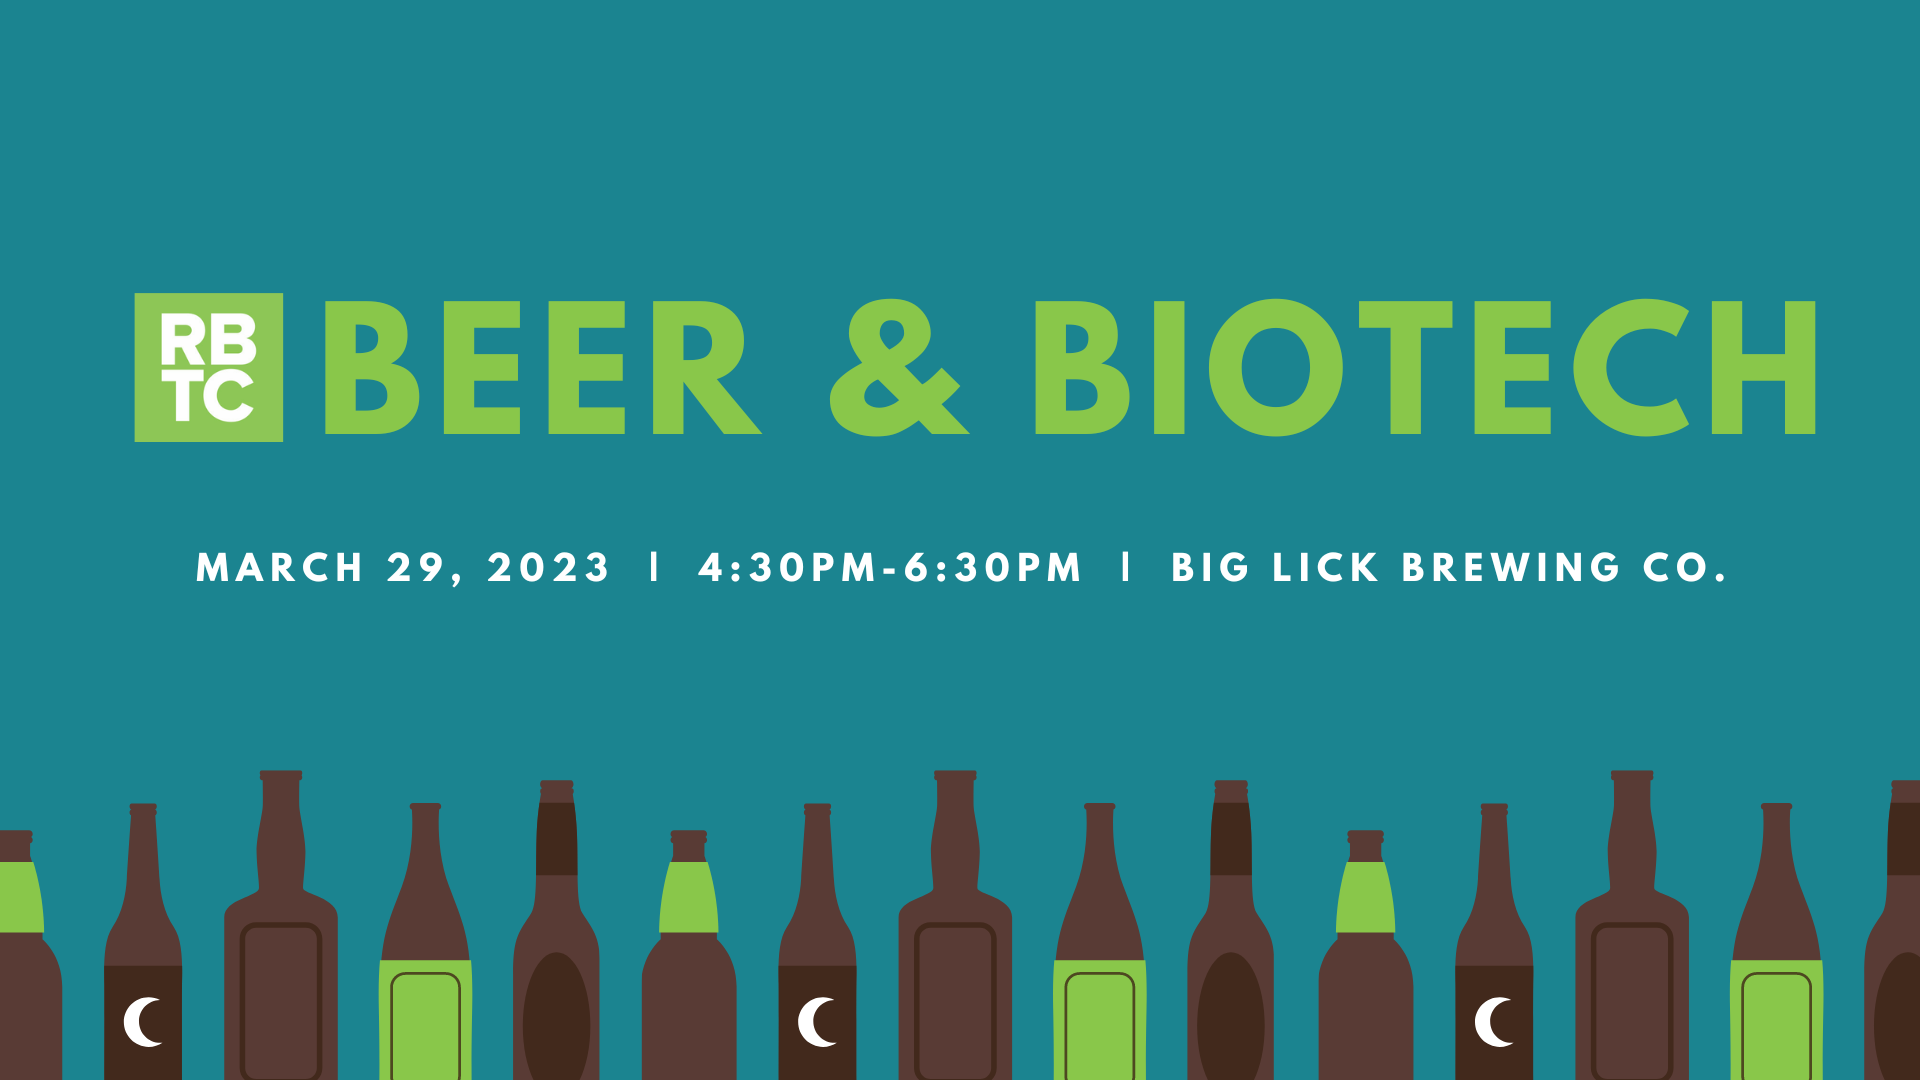 RBTC Beer & Biotech with JLABS